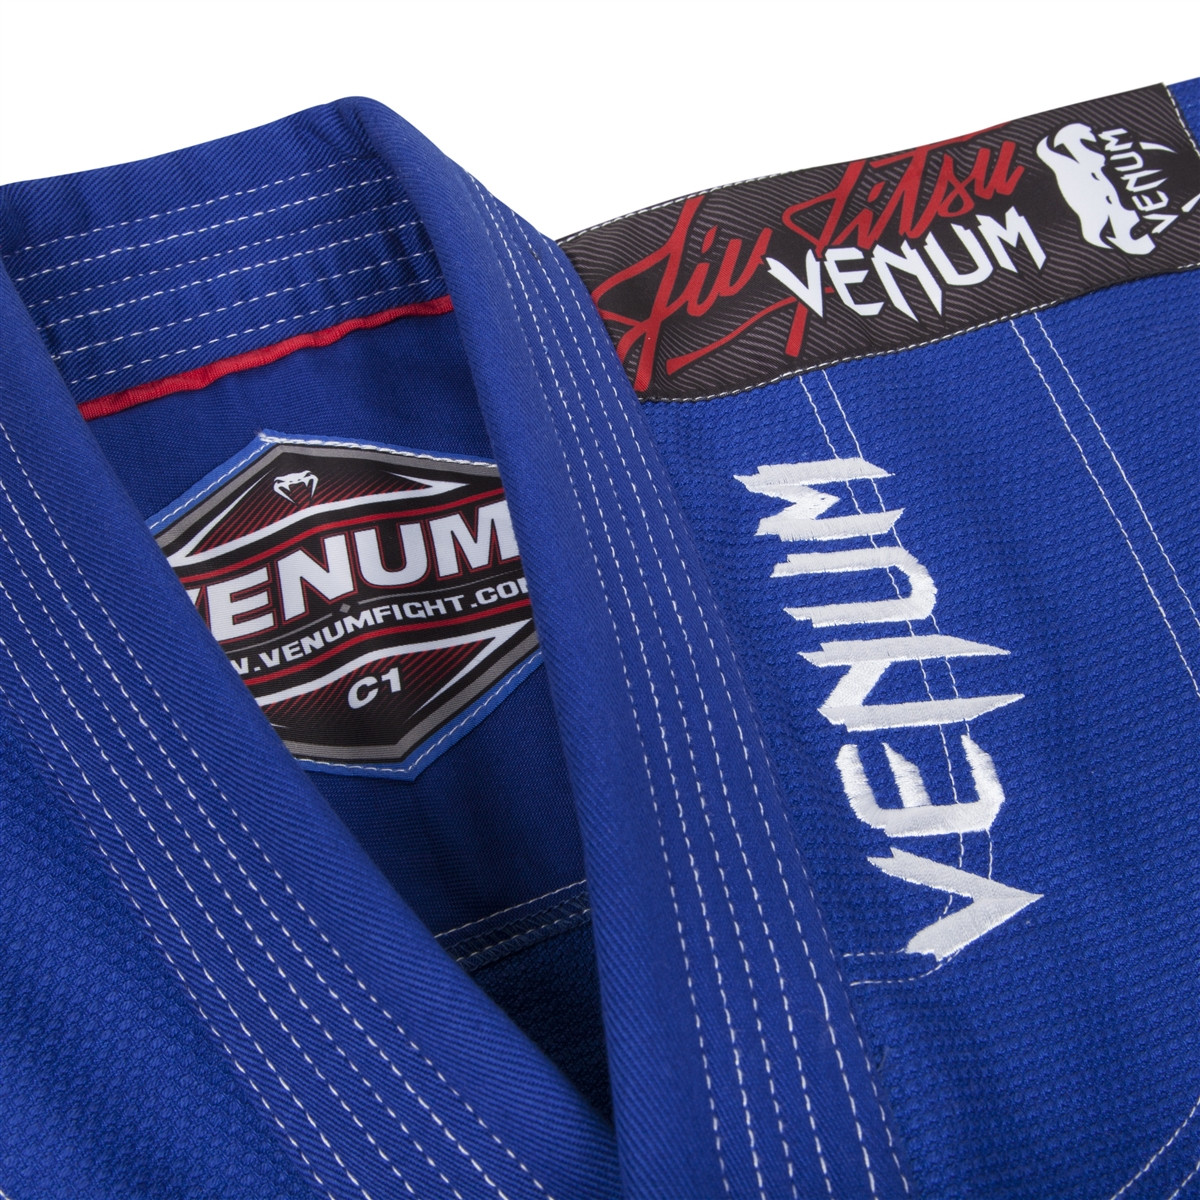 Venum challenger 2.0 kids blue jiu jitsu gi jacket @ www.thejiujitsushop.com